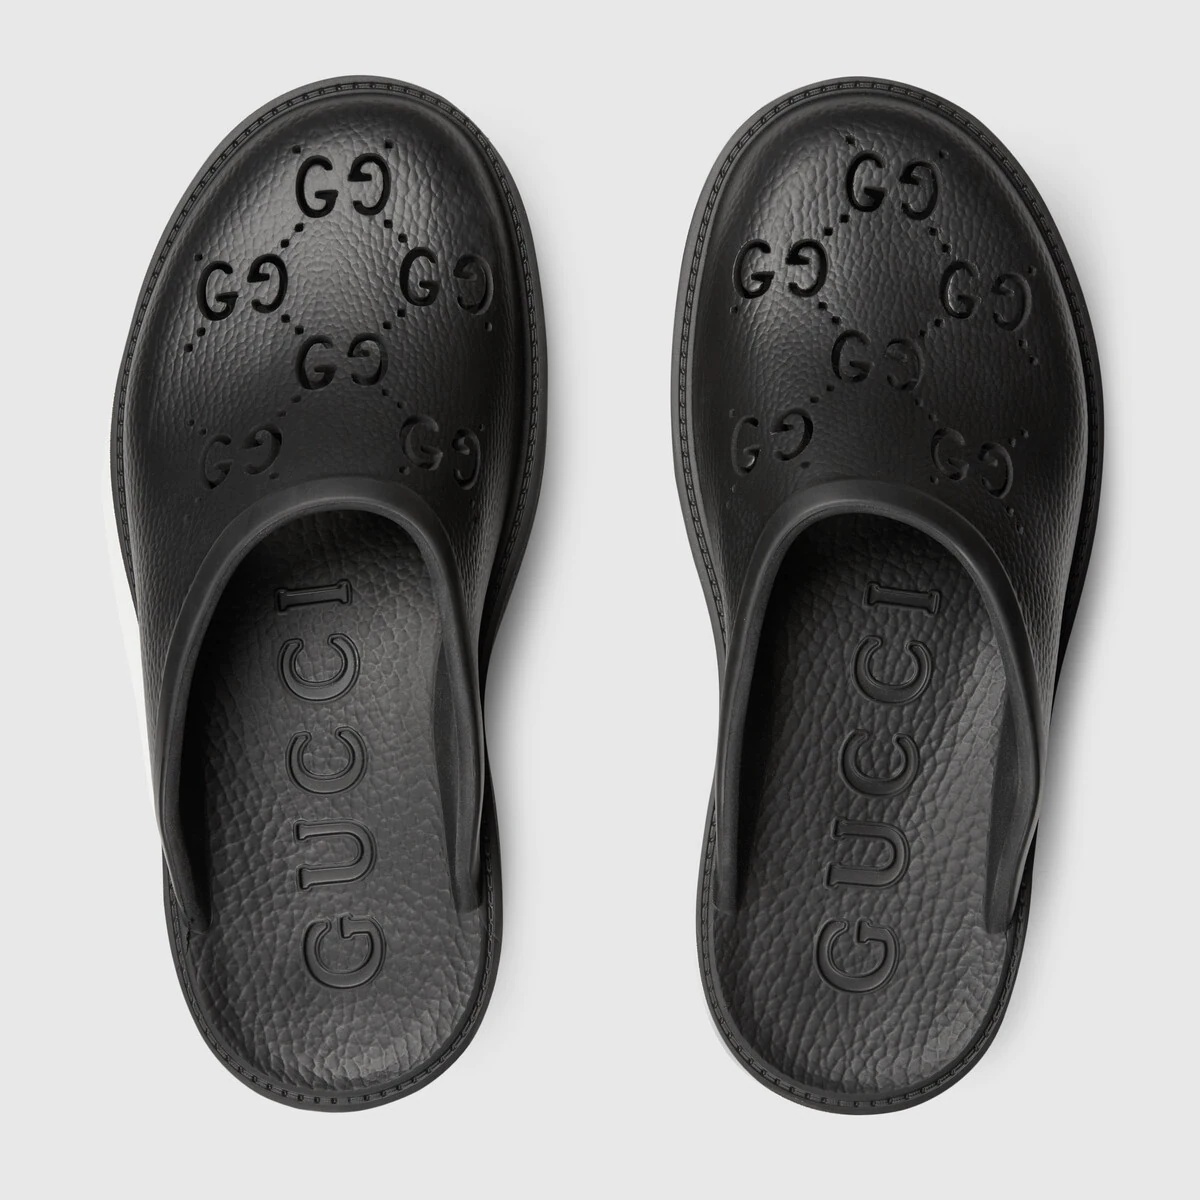 Women's platform perforated G sandal